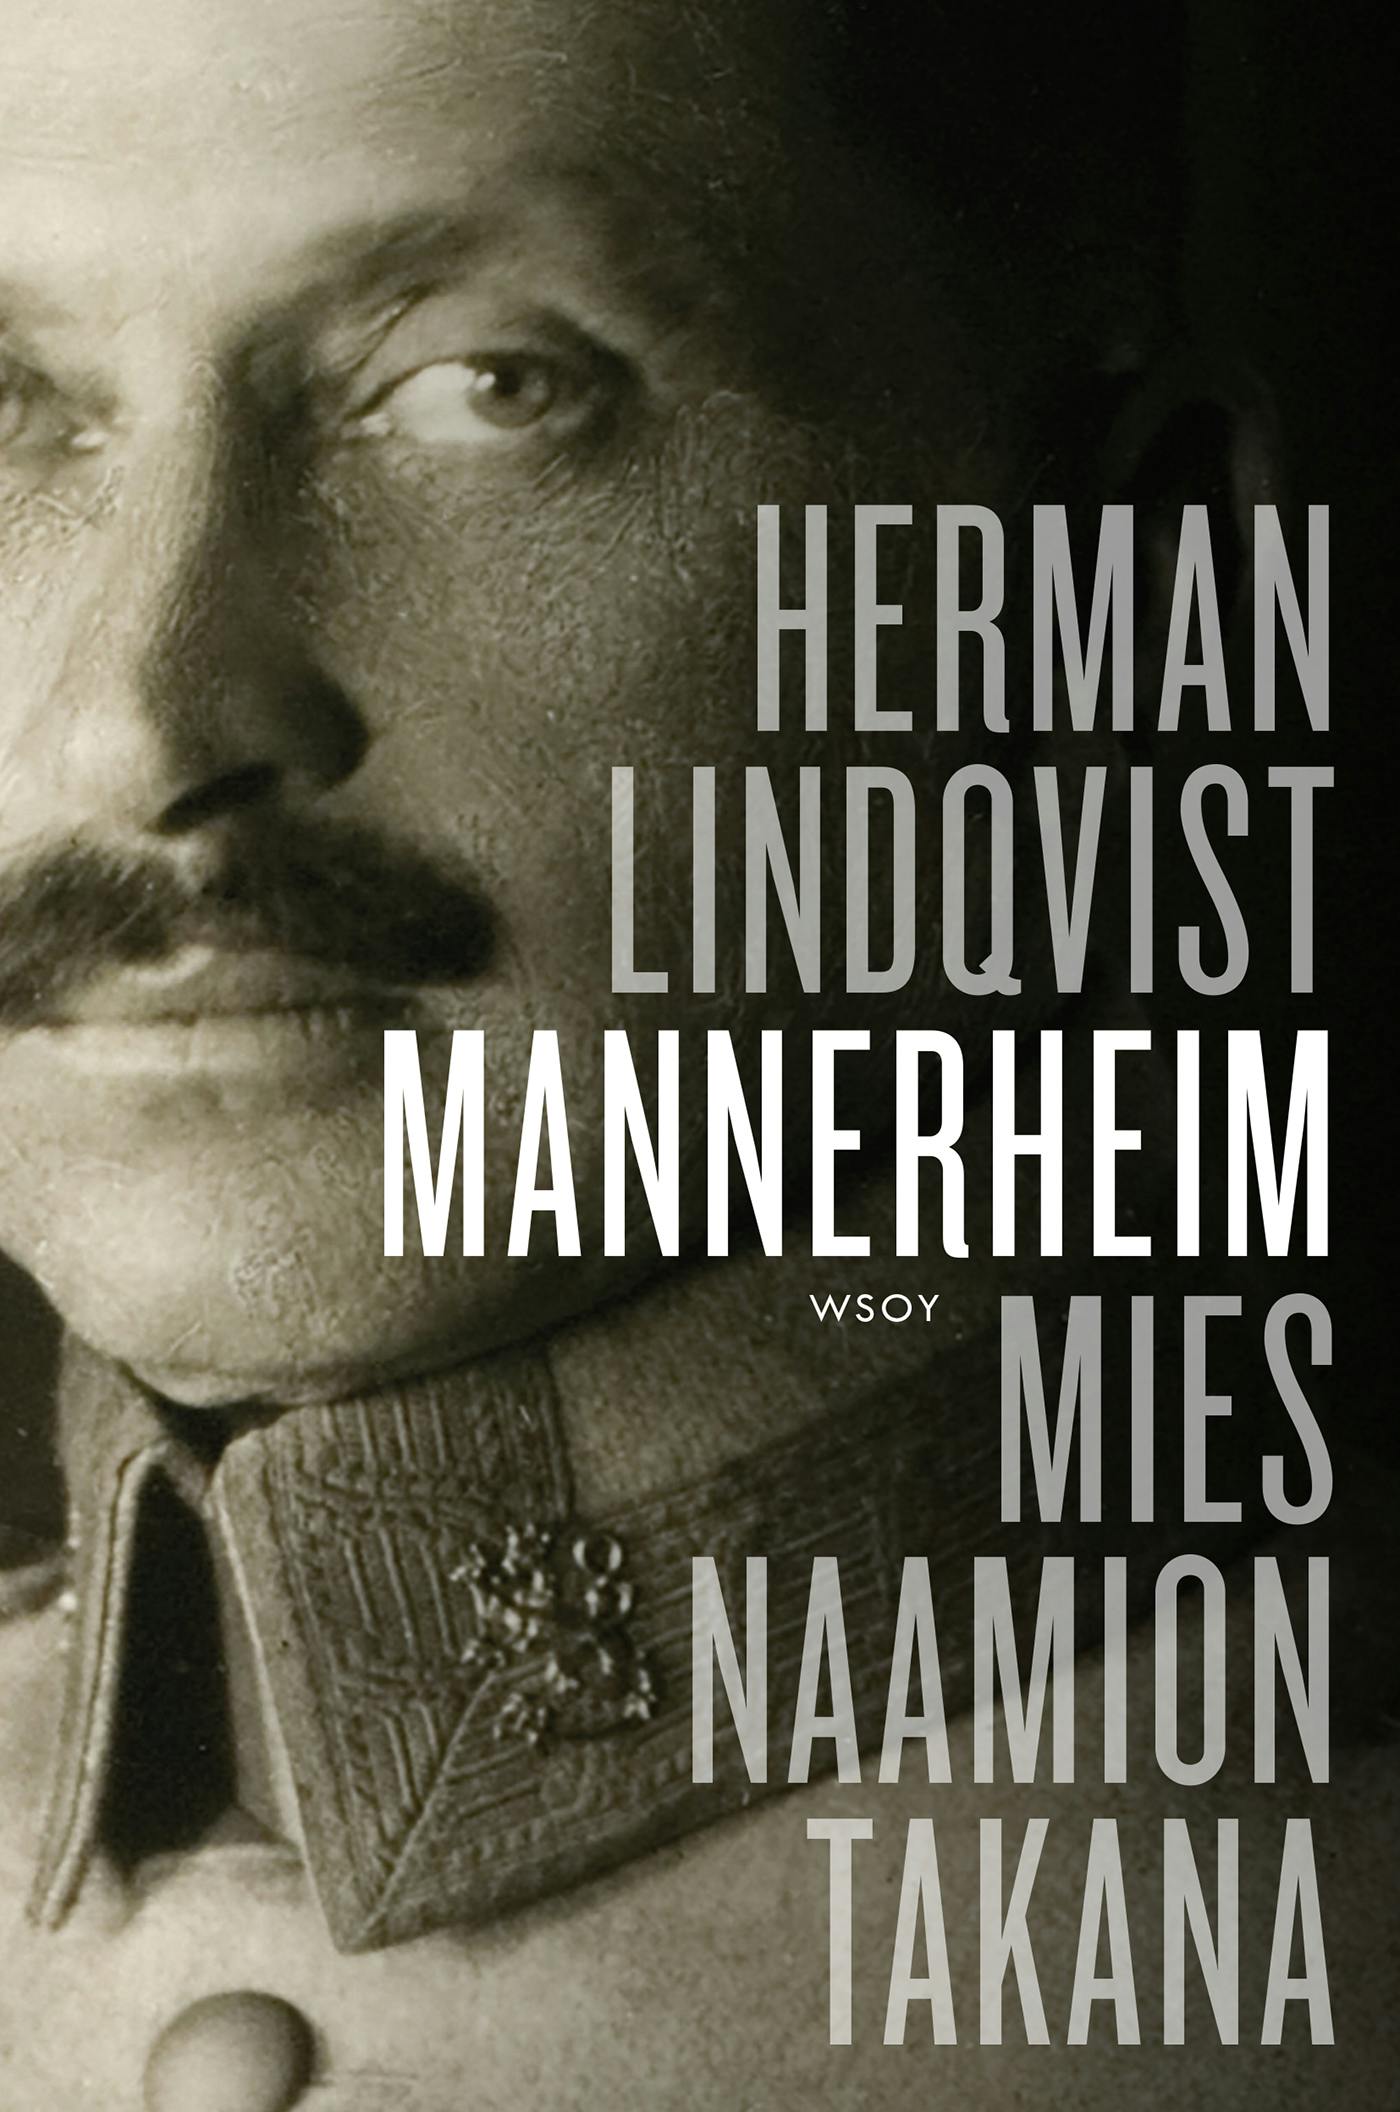 Mannerheim: Mies naamion takana - Herman Lindqvist